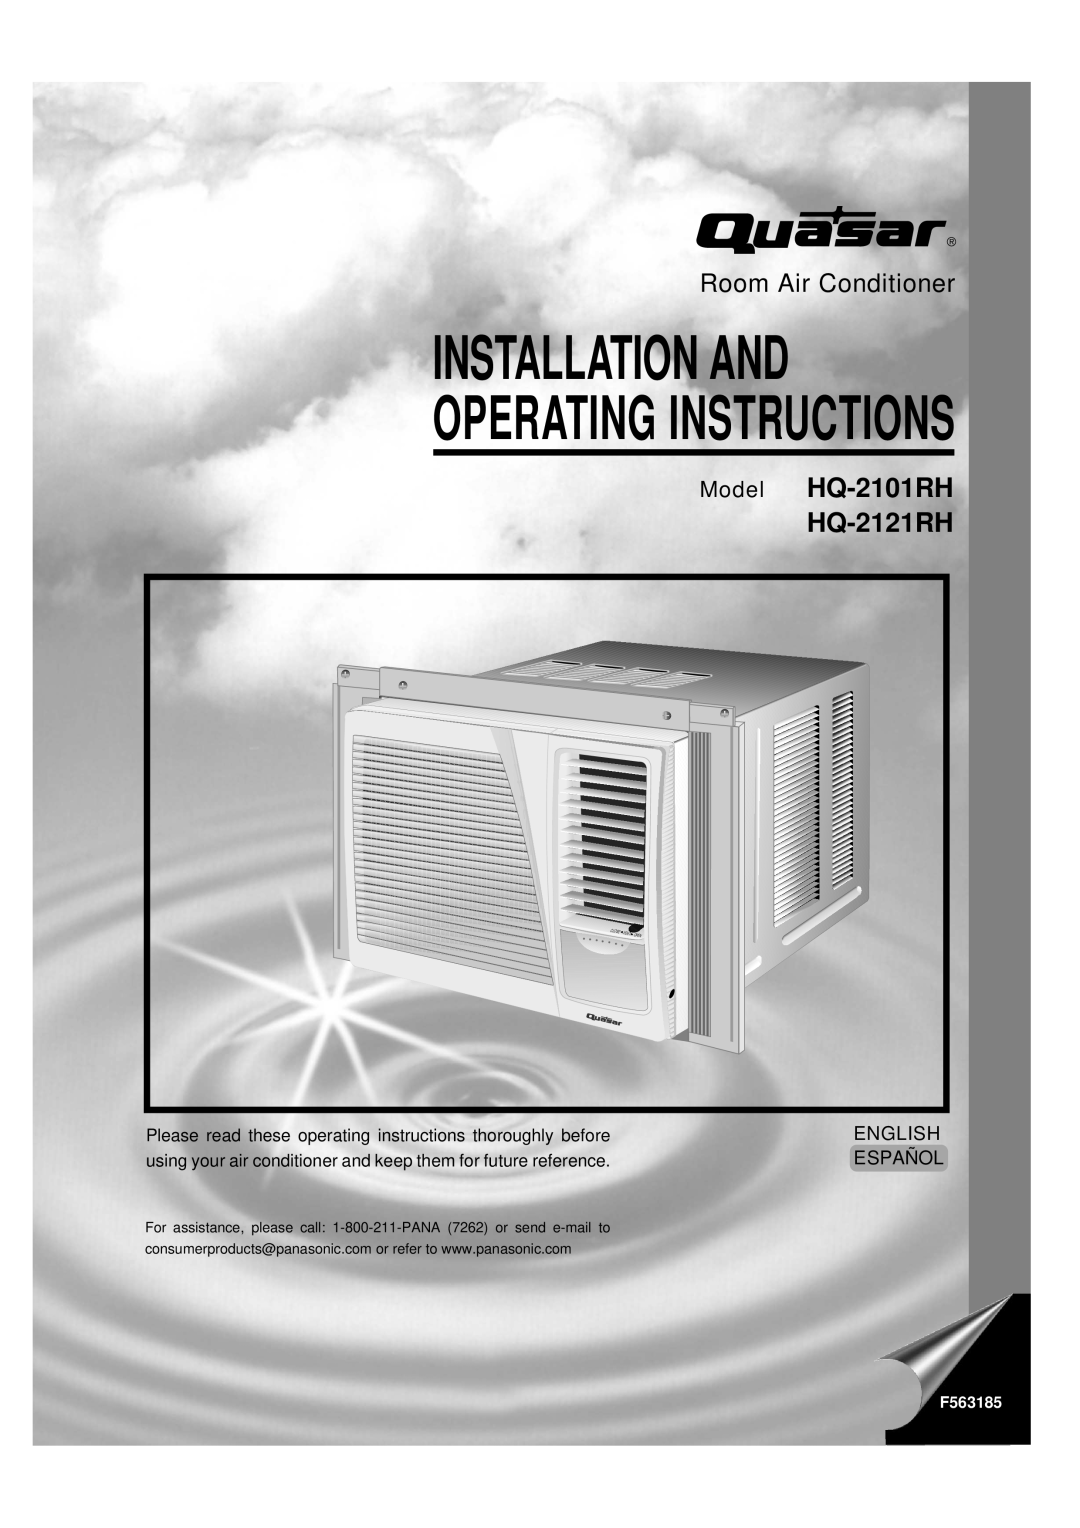 Quasar HQ-2121RH manual Installation And, Operating Instructions, Room Air Conditioner, HQ-2101RH, Model, English, Español 